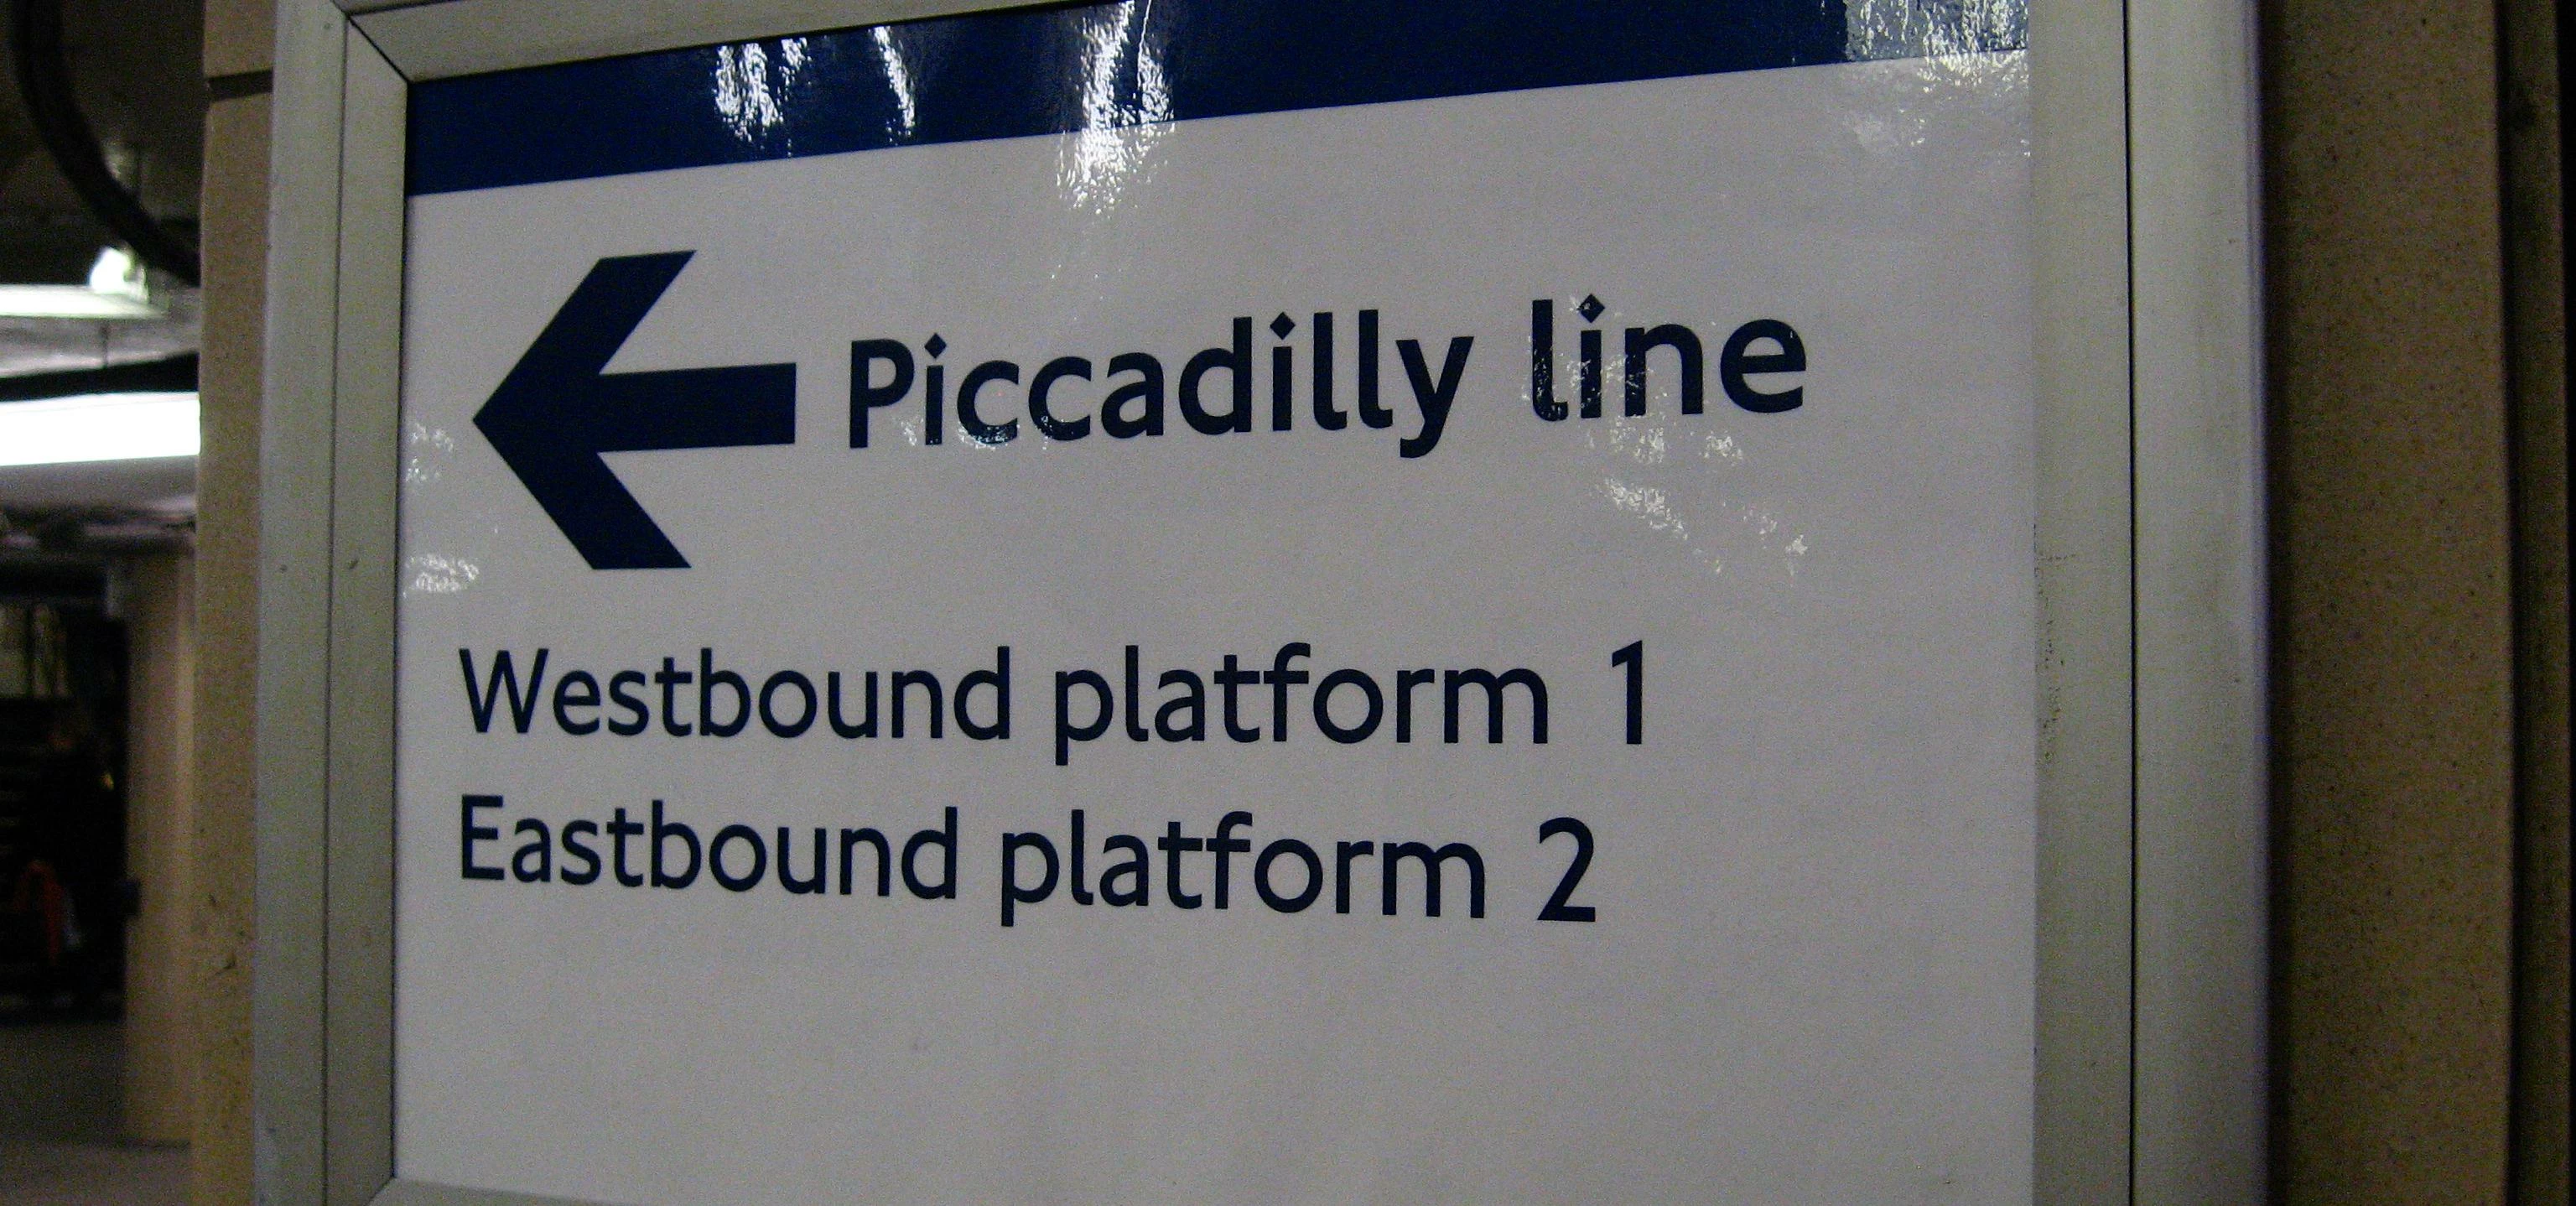 Piccadilly Line platforms